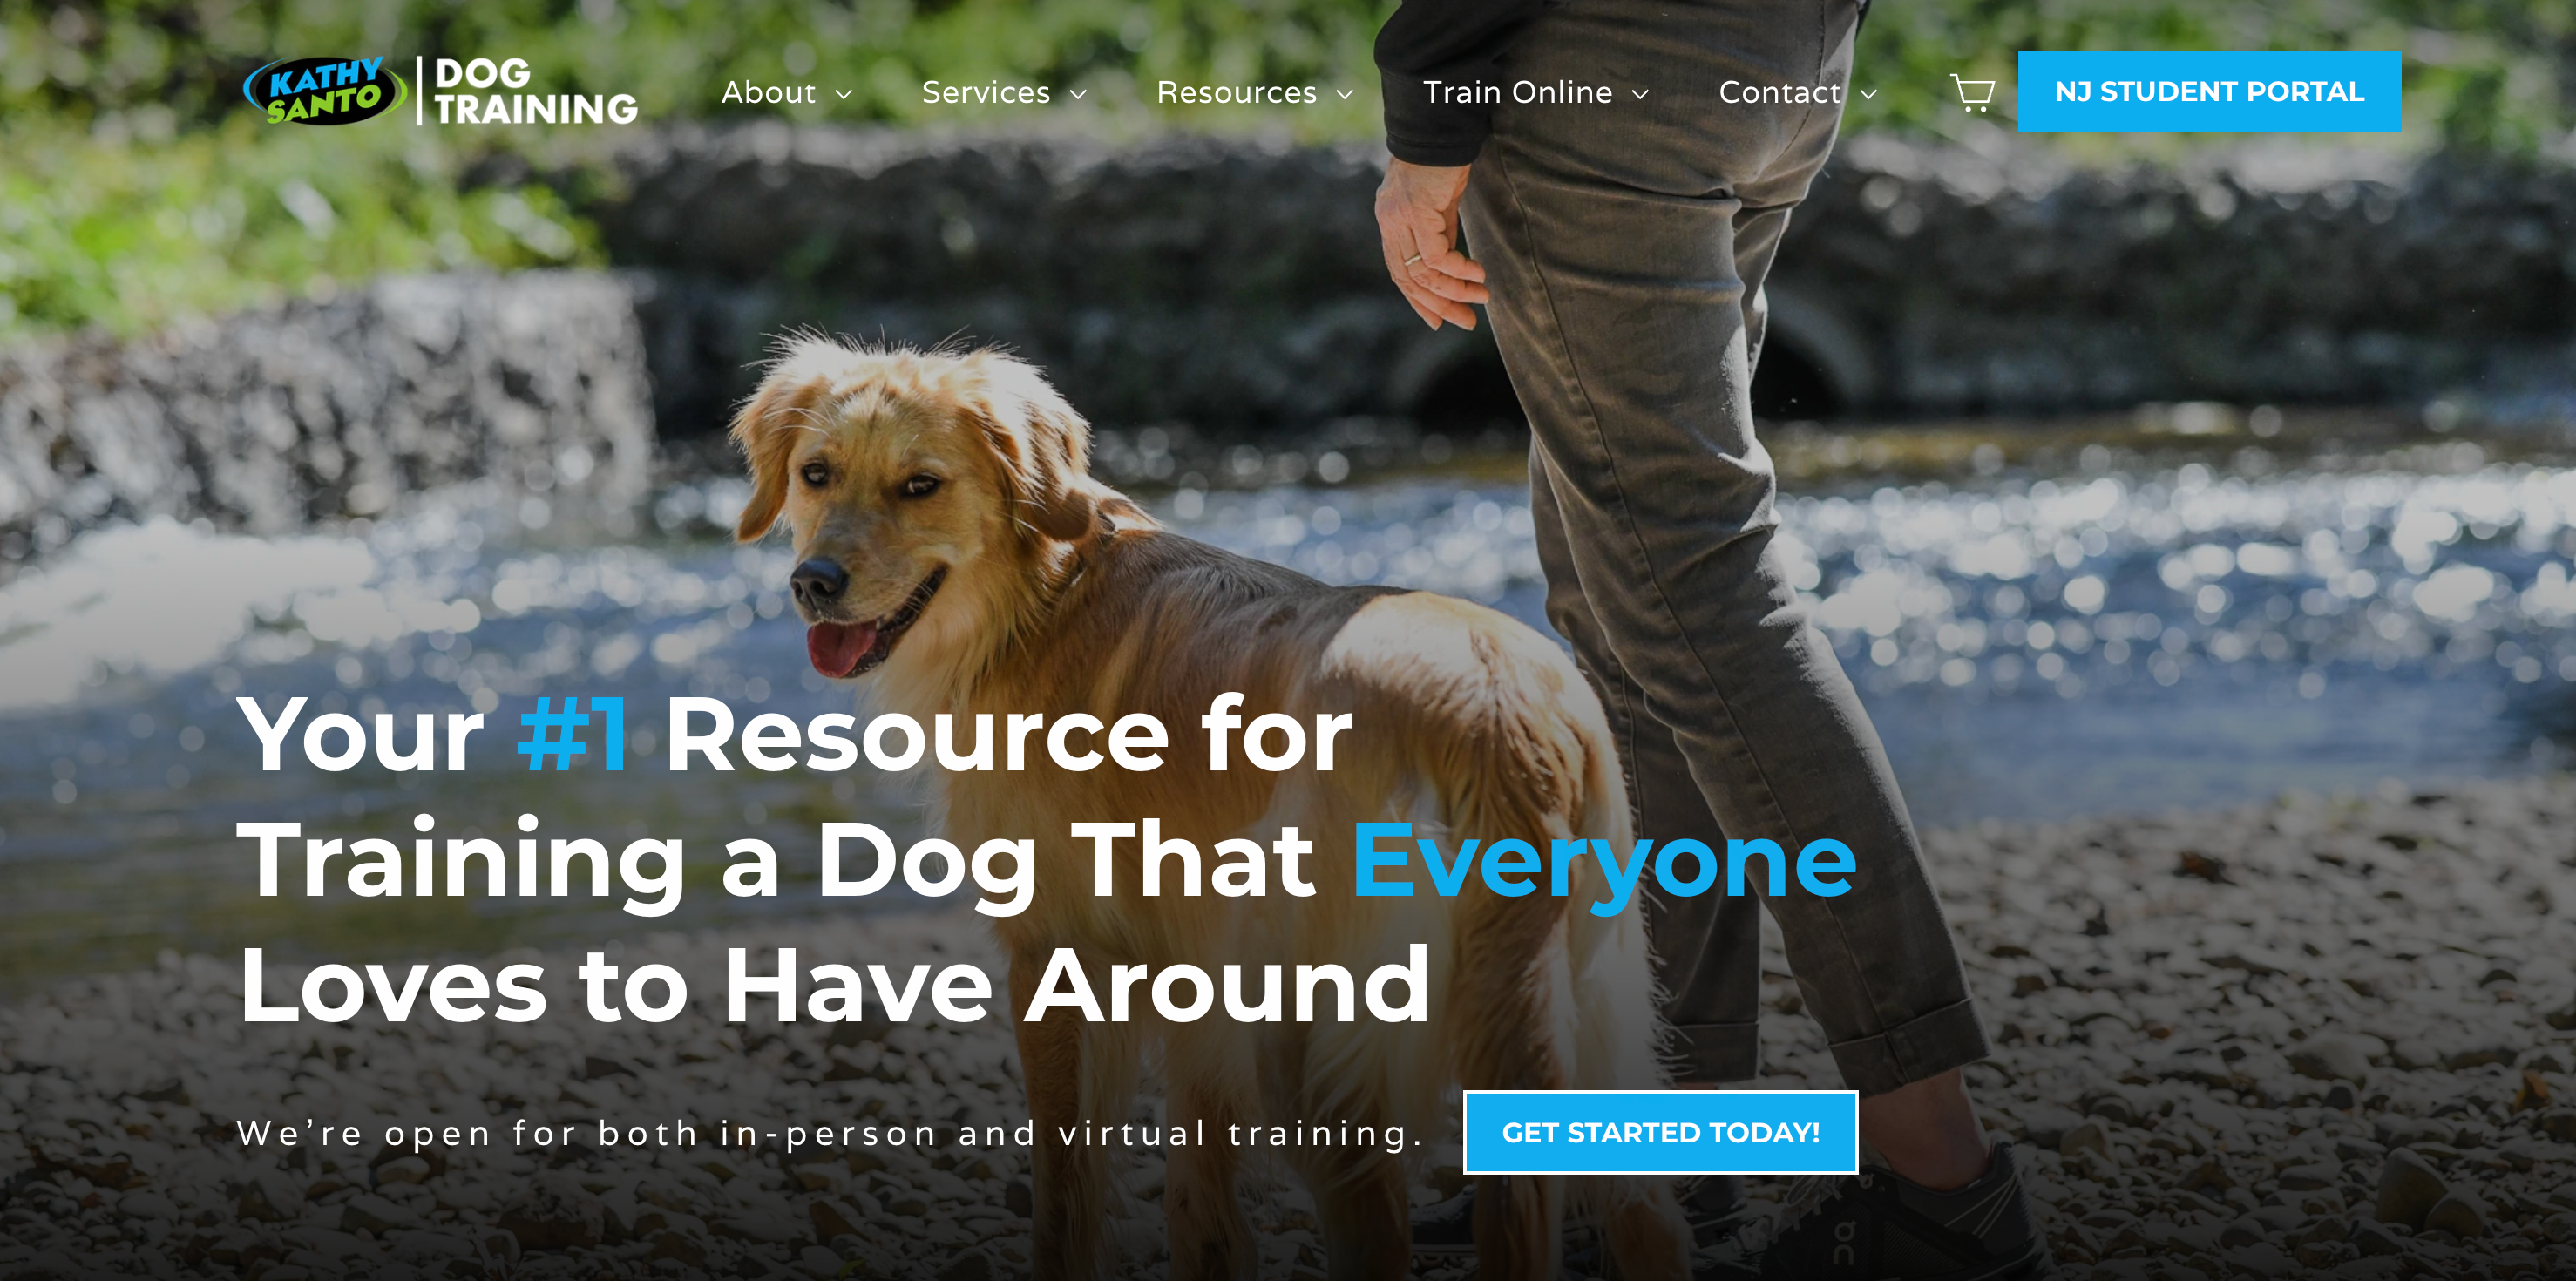 Kathy Santo Dog Training | Online Dog Training | Train. Stay. Play.